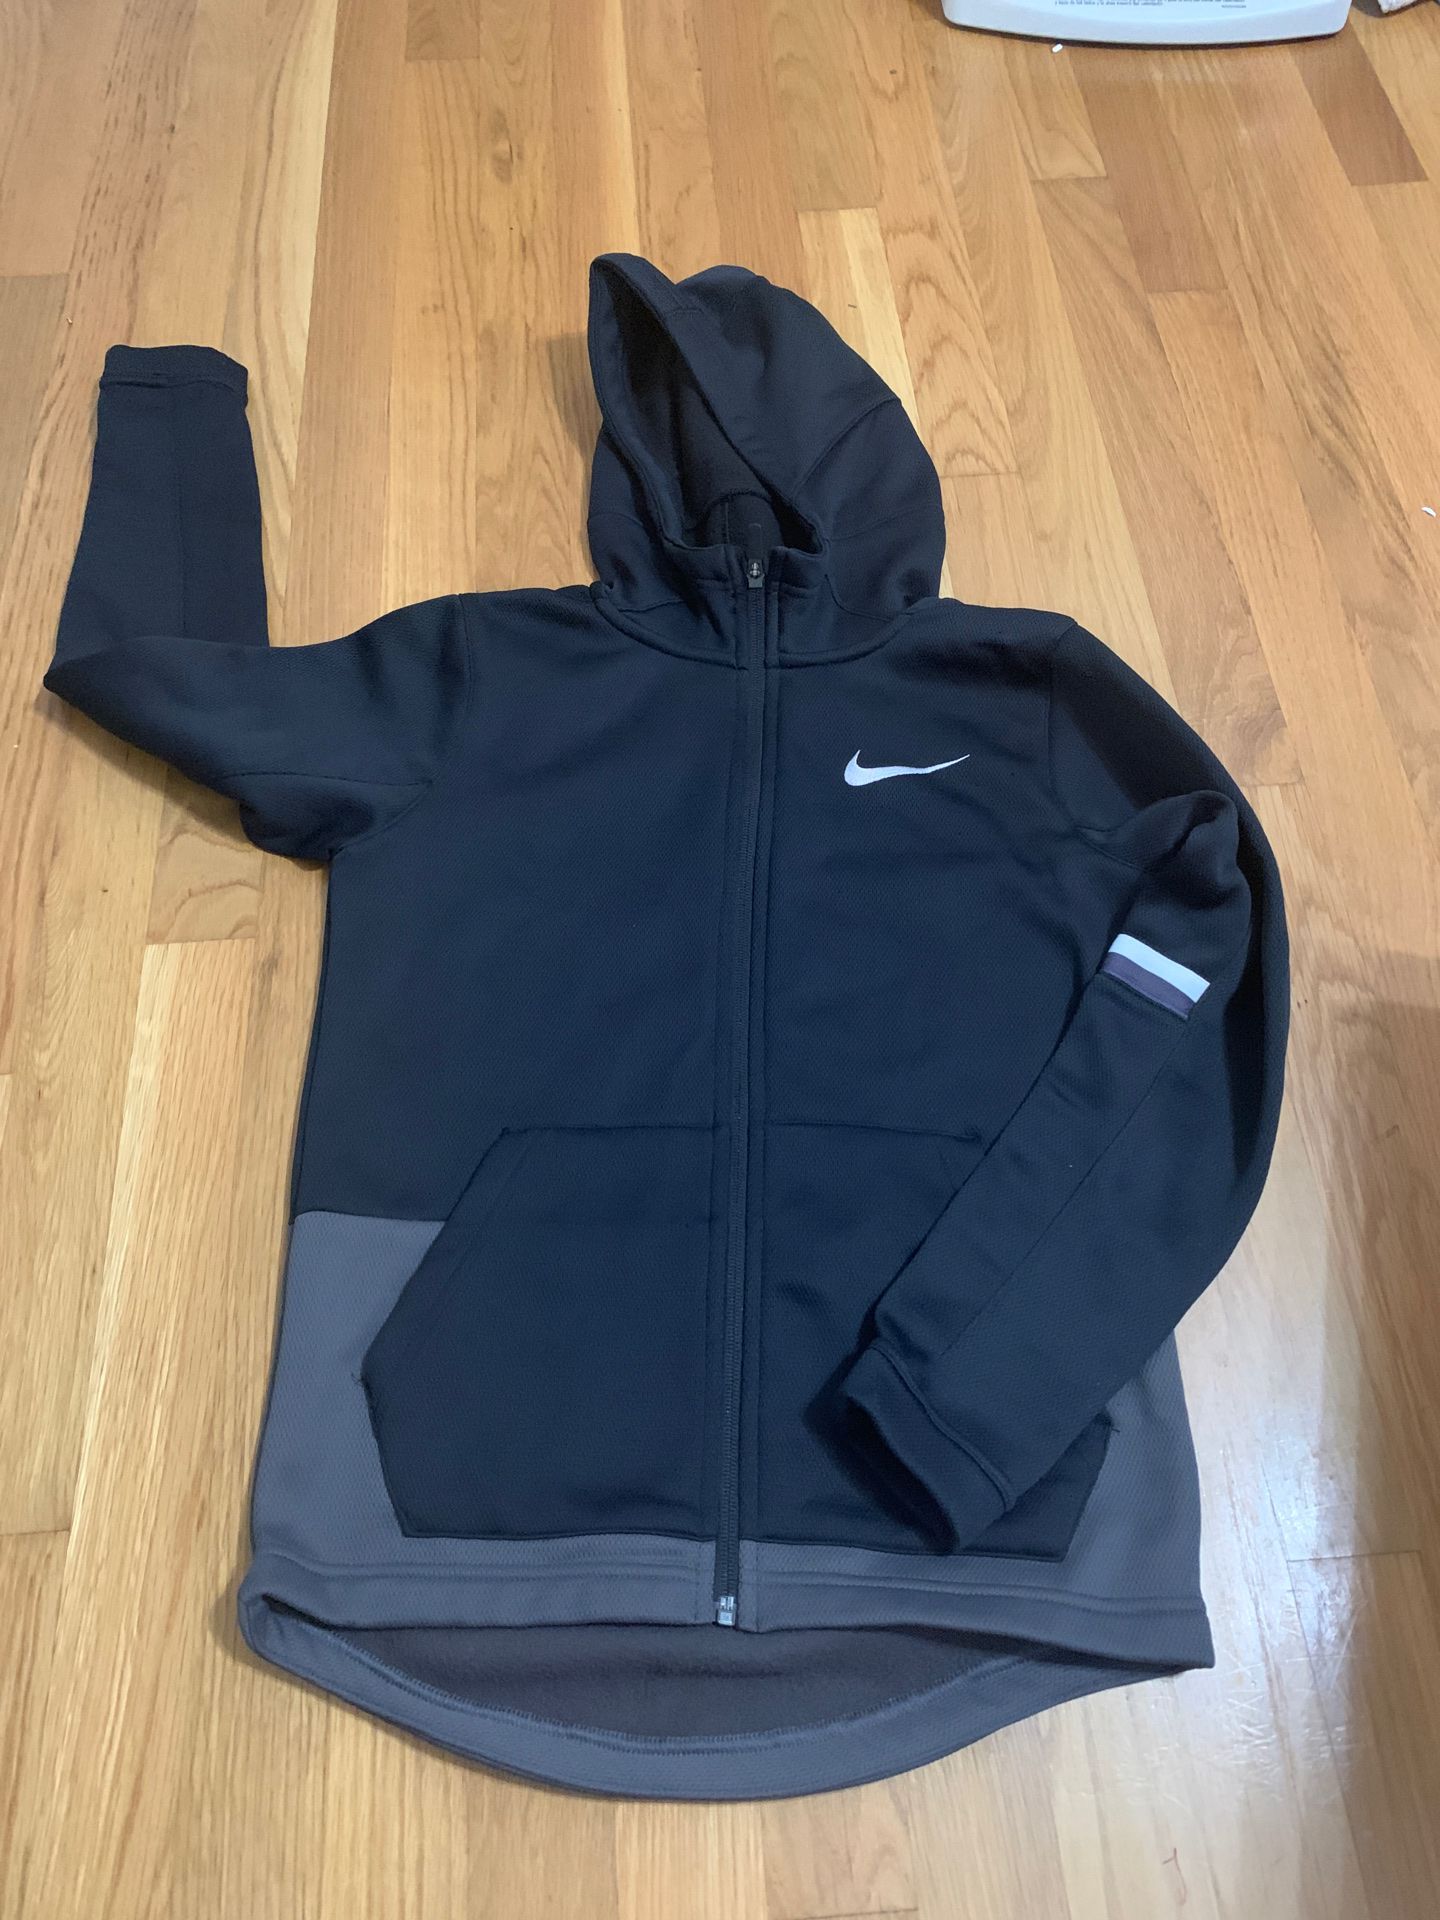 Nike boy jacket size L